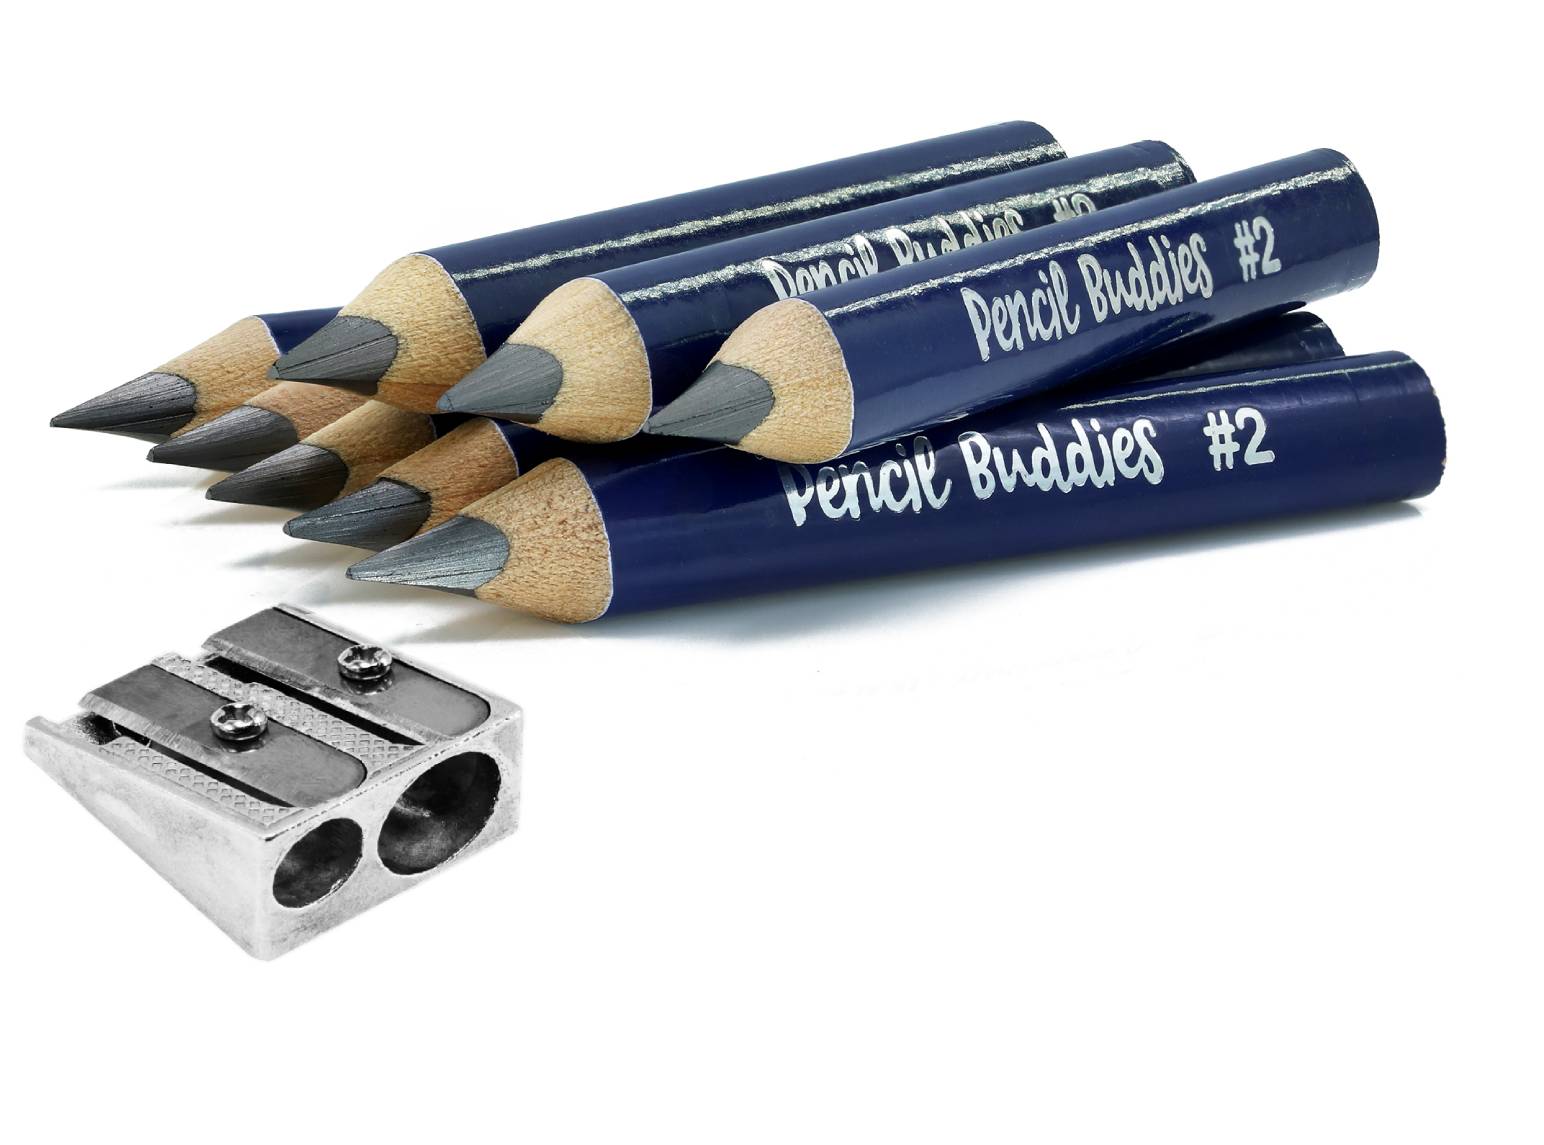 https://pencilbuddies.com/wp-content/uploads/2021/03/Navy-Blue-Kids-Large-Pencils.jpg